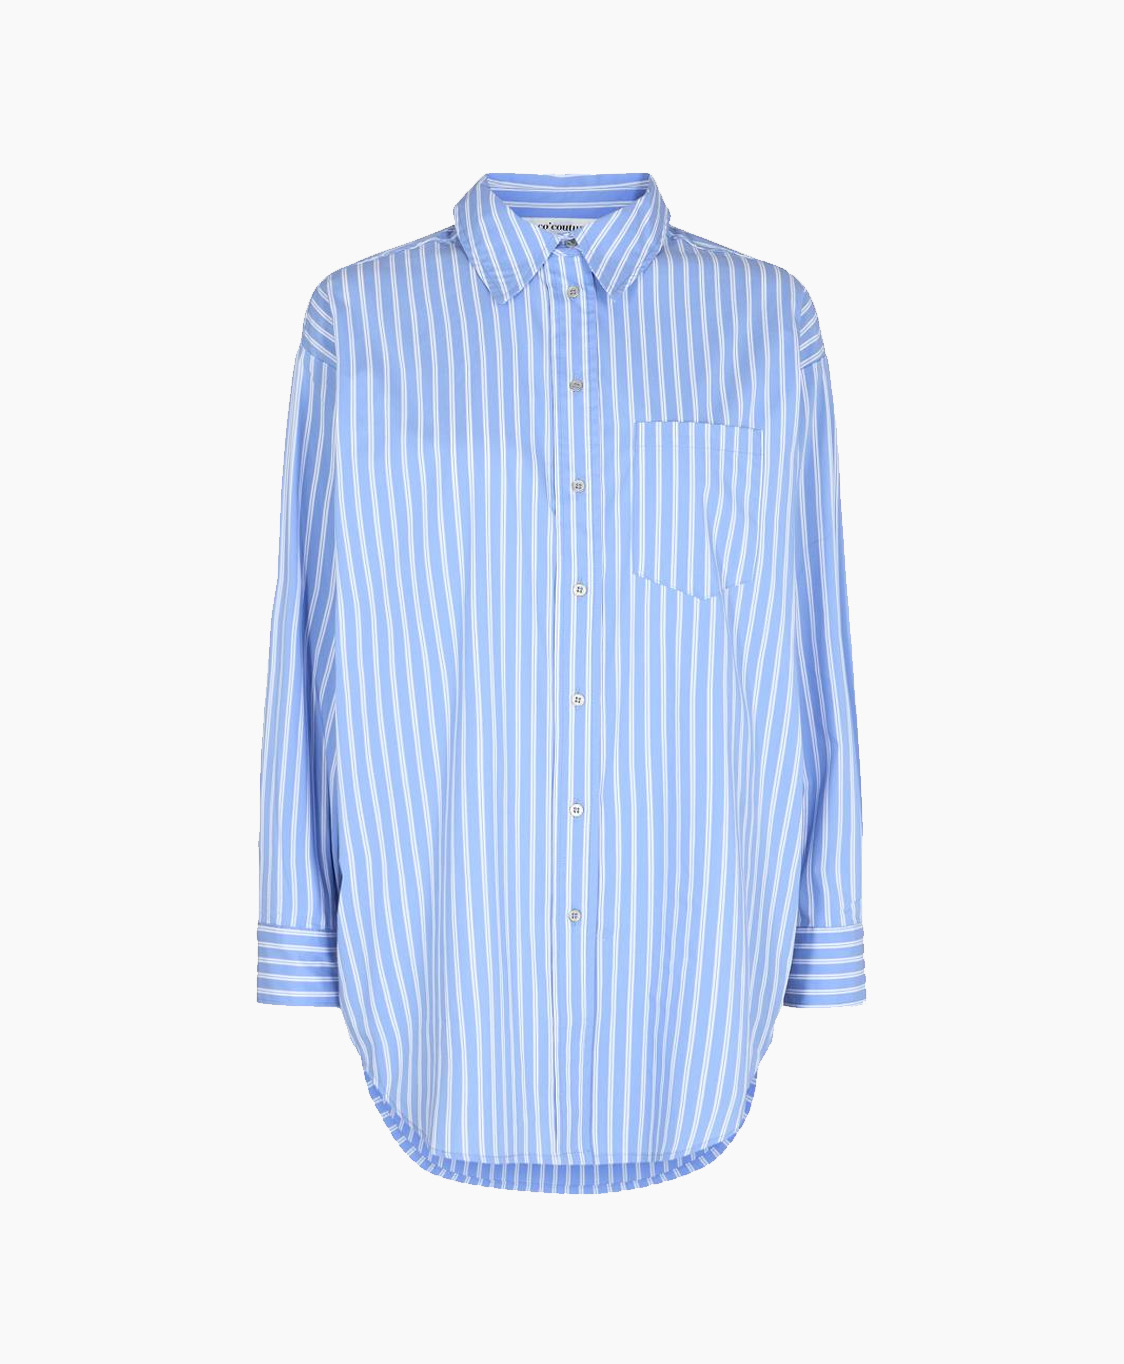 Co'couture T-shirt Adis Oversize Stripe Blauw